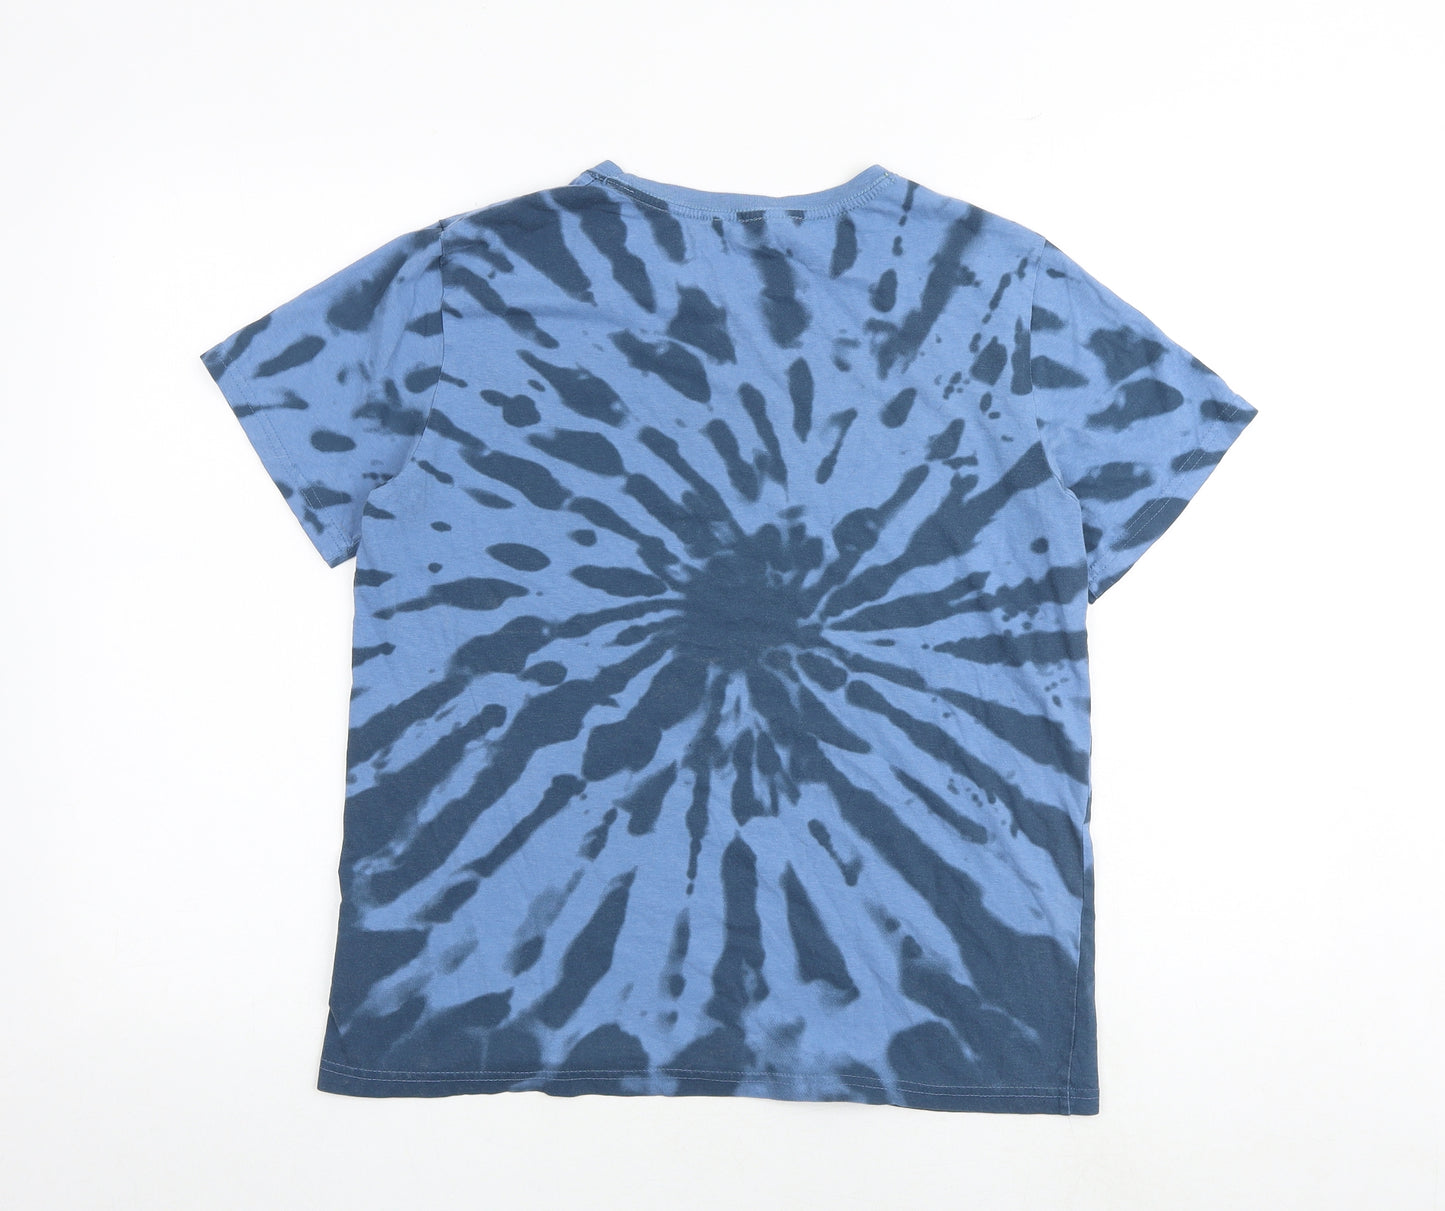 H&M Boys Blue Geometric 100% Cotton Basic T-Shirt Size 13-14 Years Round Neck Pullover - Tie Dye